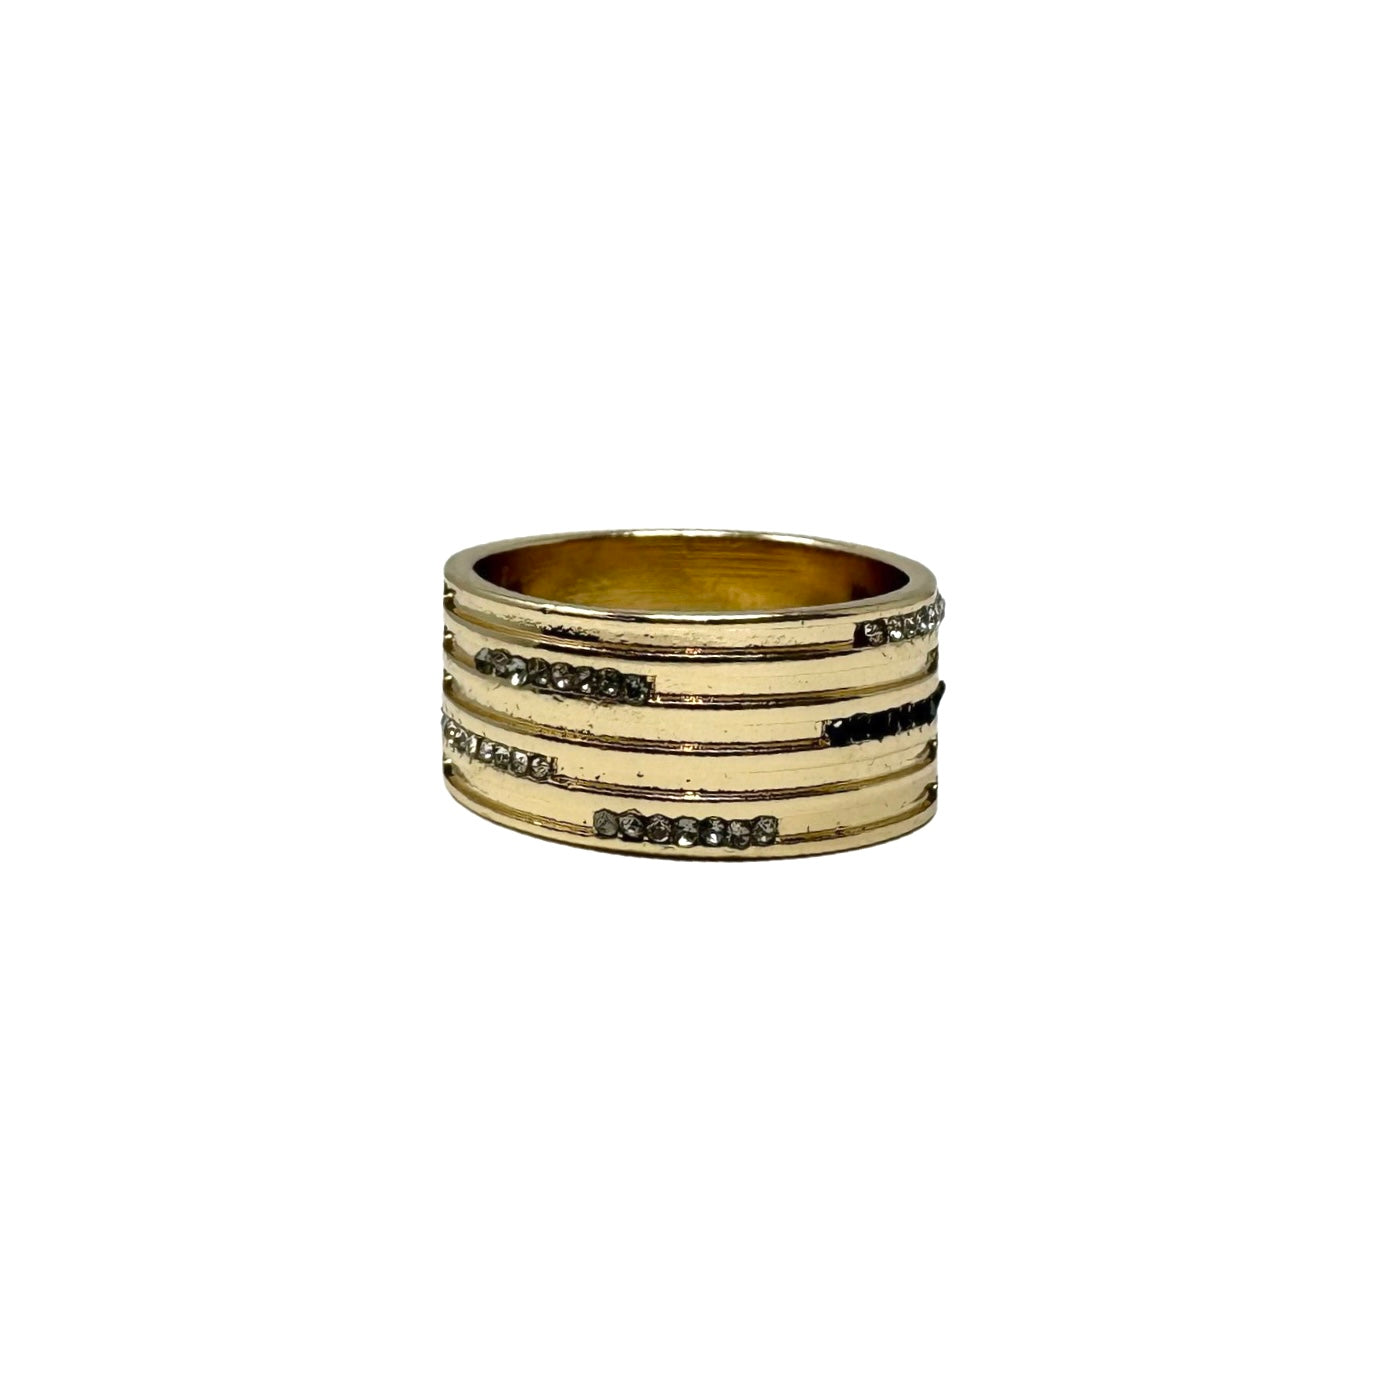 WFTW Rhinestone Detail Gold Tone Ring